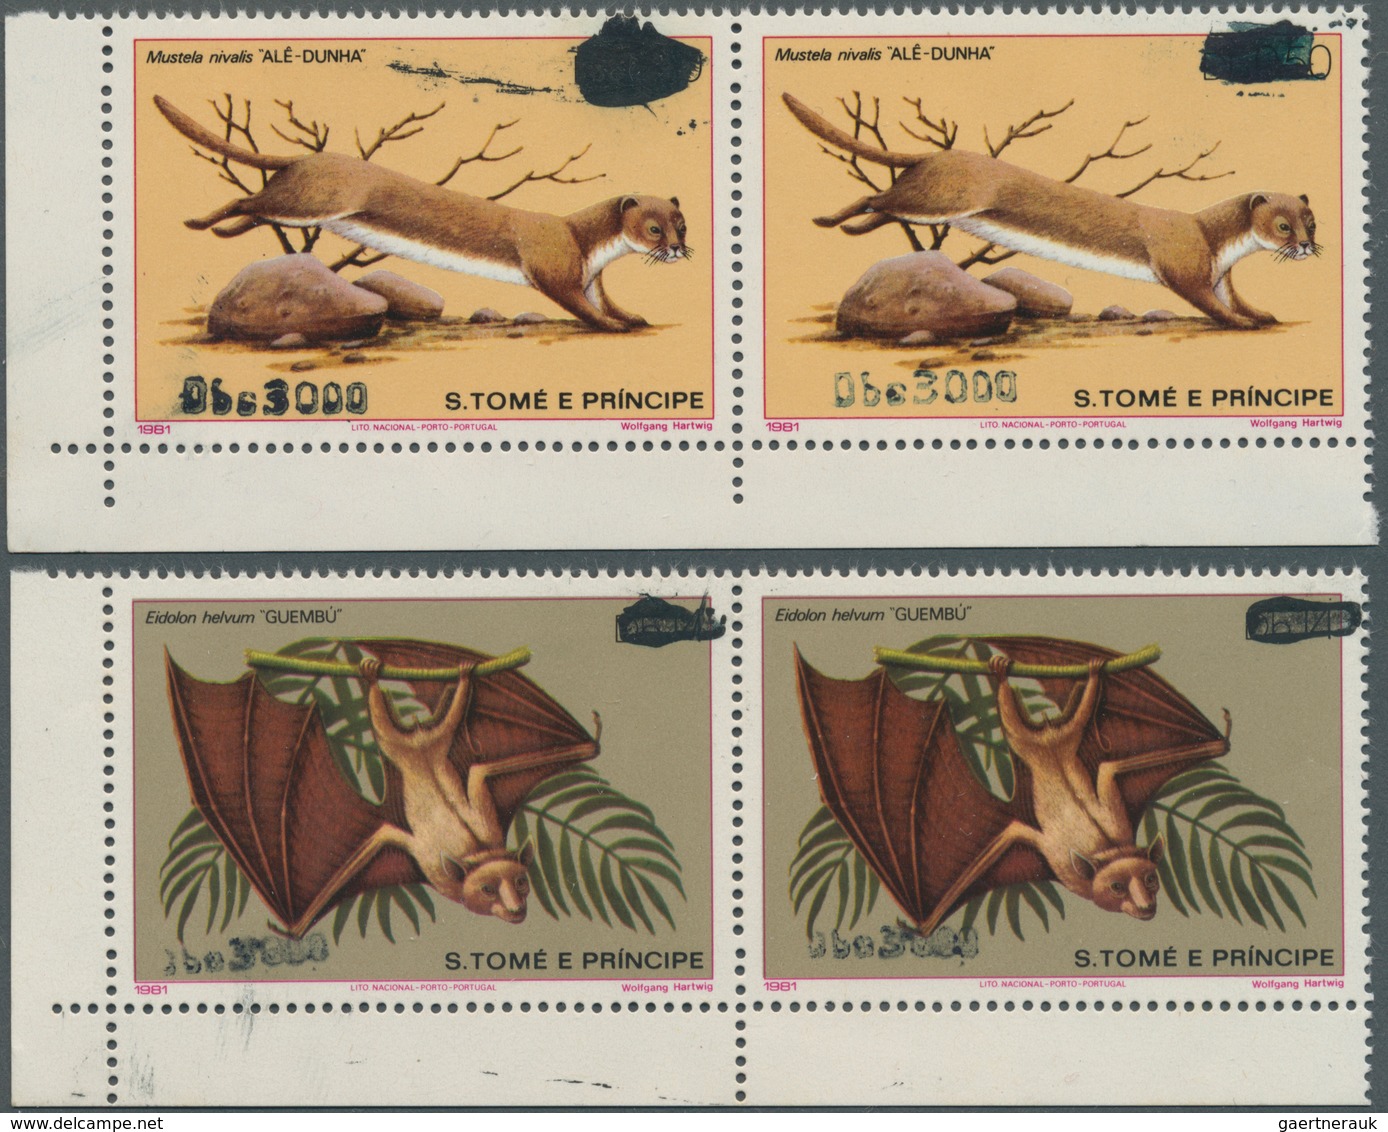 St. Thomas Und Prinzeninsel - Sao Thome E Principe: 1998, Animals Complete Set Of Three Diff. Stamps - Sao Tome Et Principe